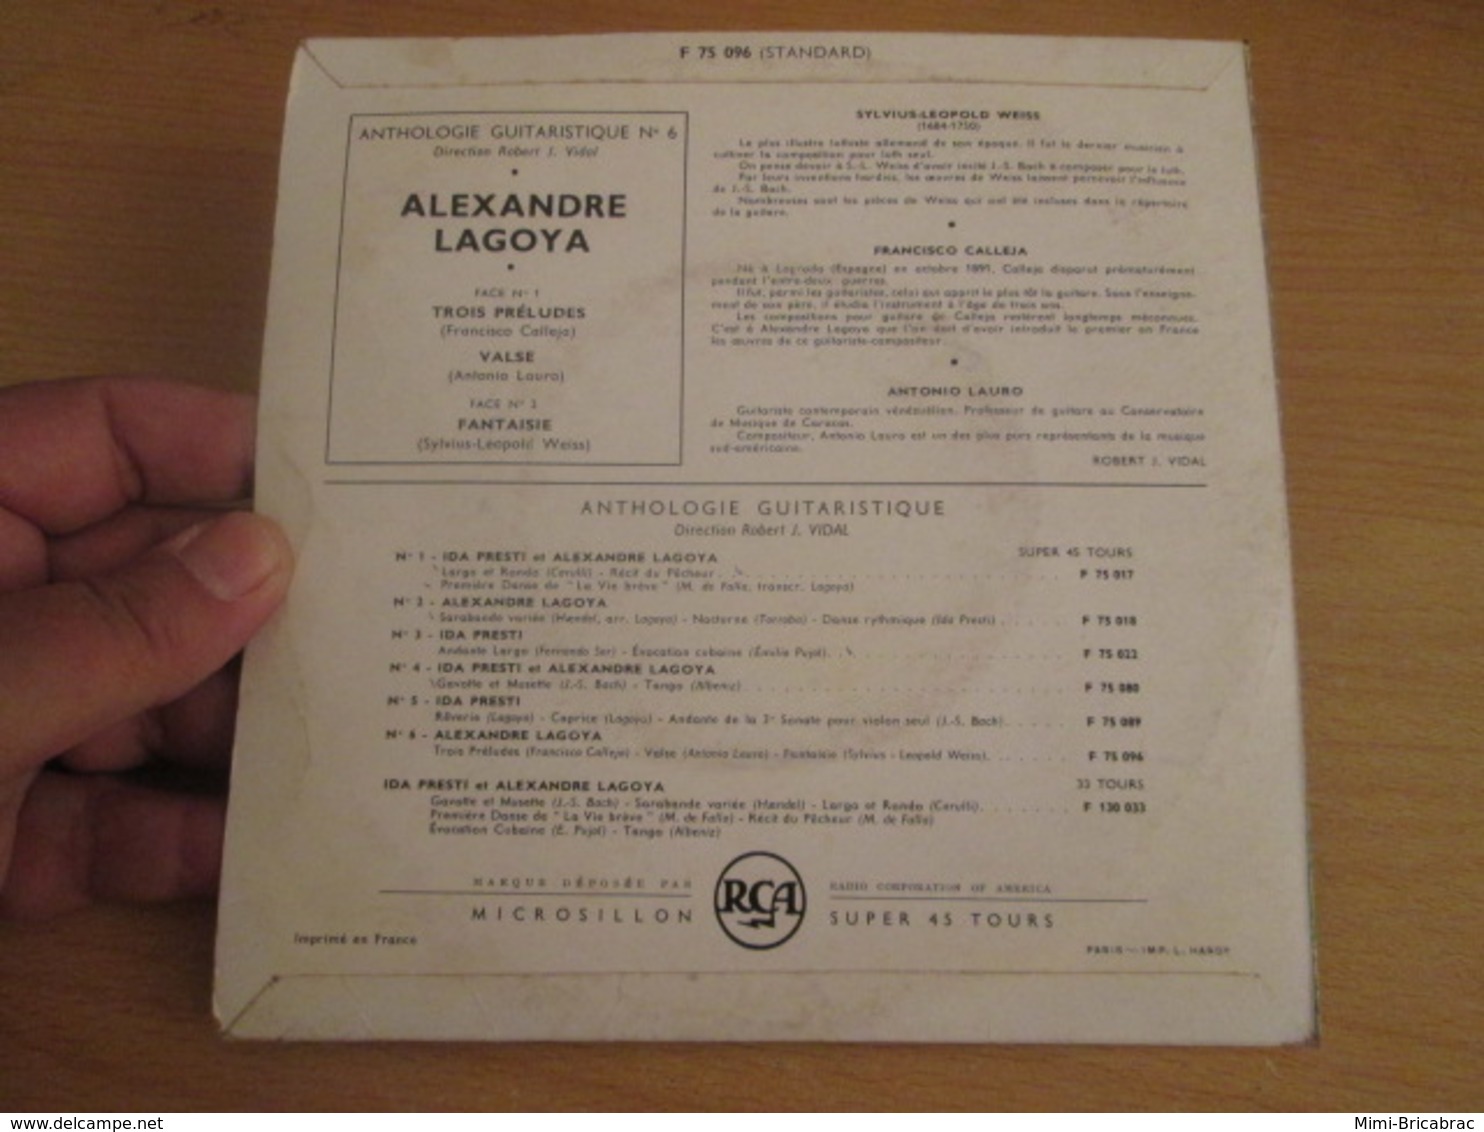 DISQUE 45T A. LAGOYA "ANTHOLOGIE GUITARISTIQUE N° 6 " 60'S EP RCA F 75096 - Strumentali